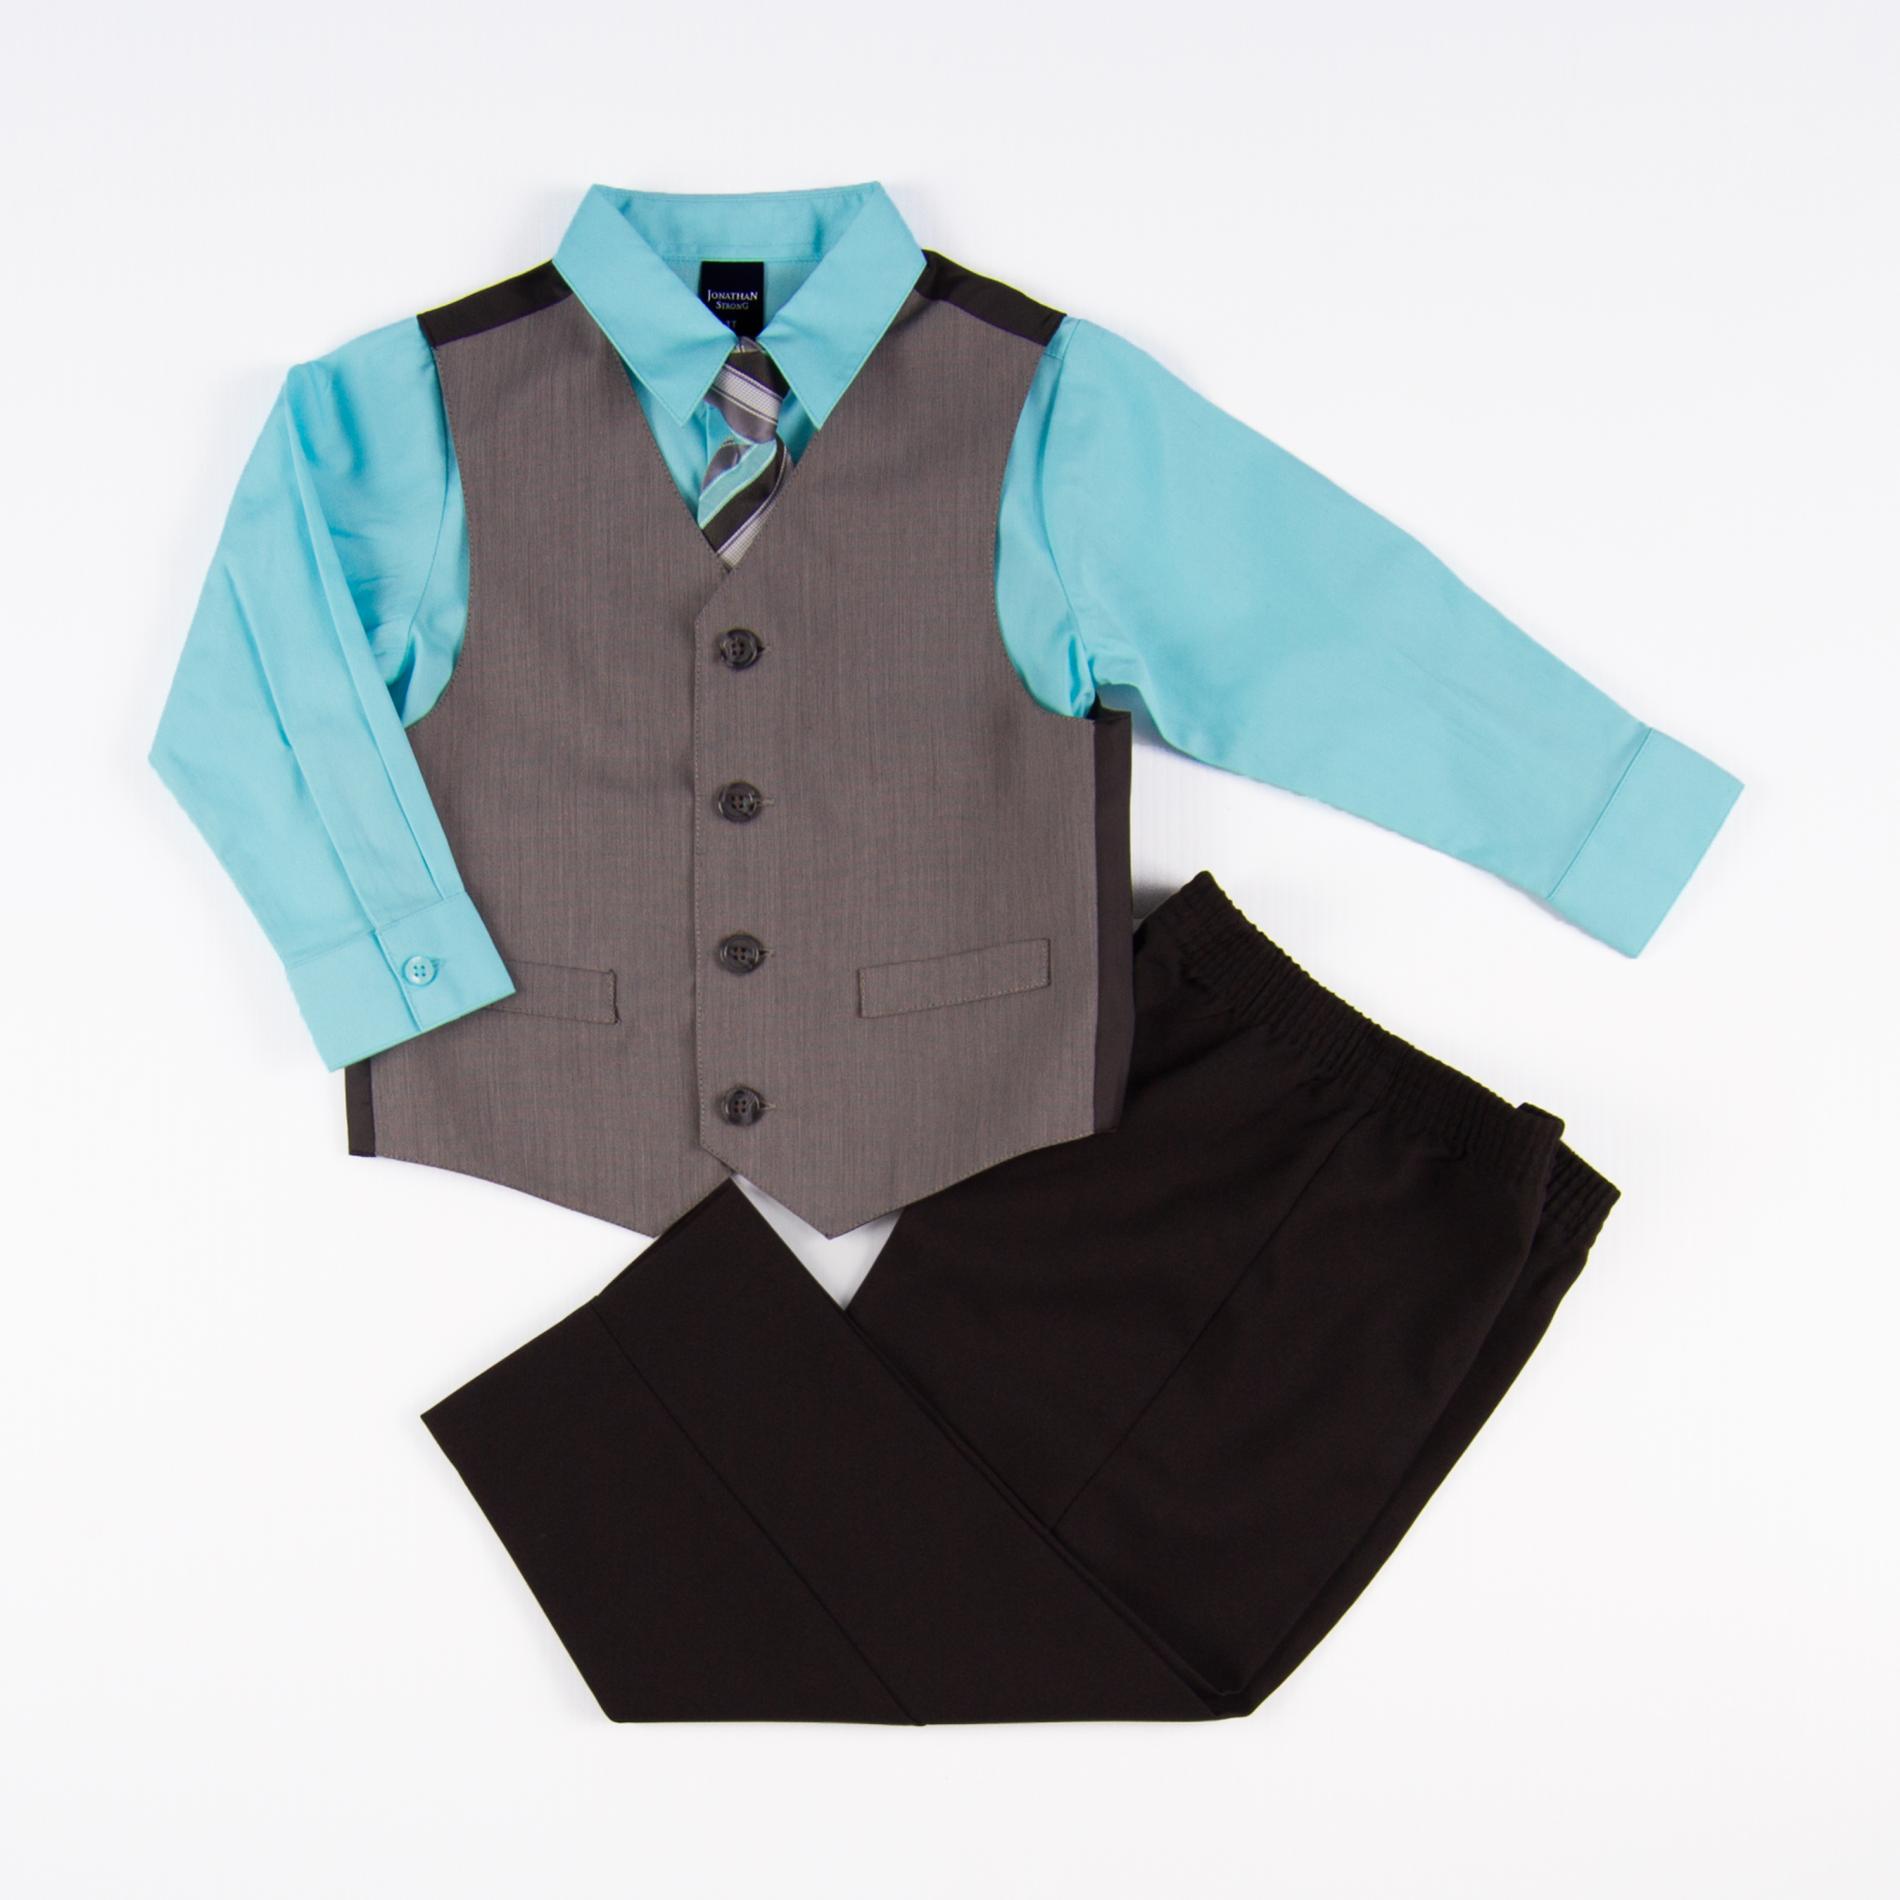 Jonathan Strong Infant & Toddler Boy's Shirt  Vest  Tie & Pants